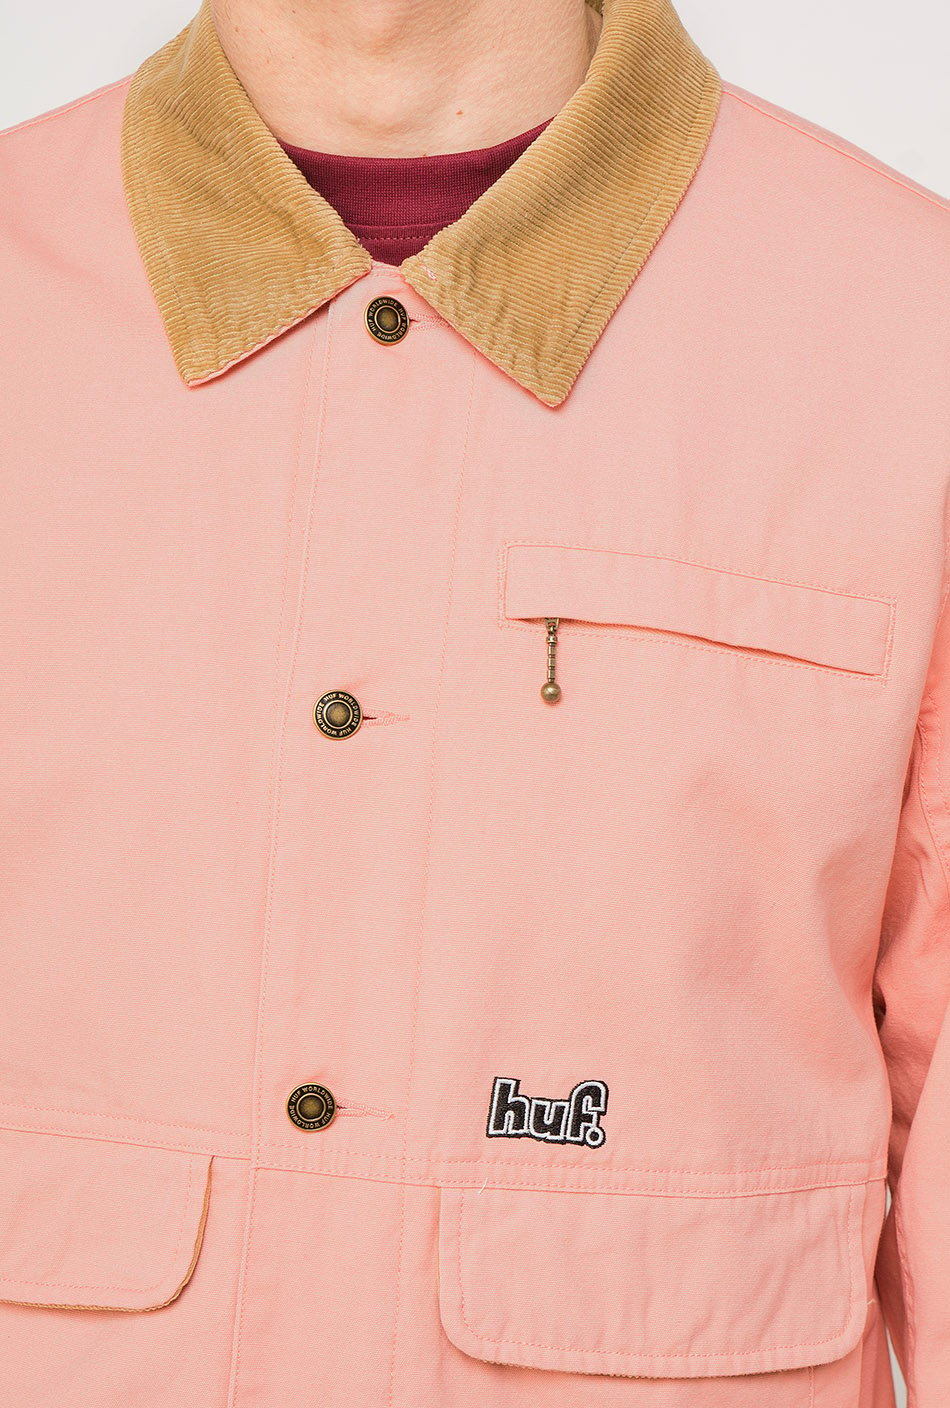 Huf Remington Jacket Coral Pink